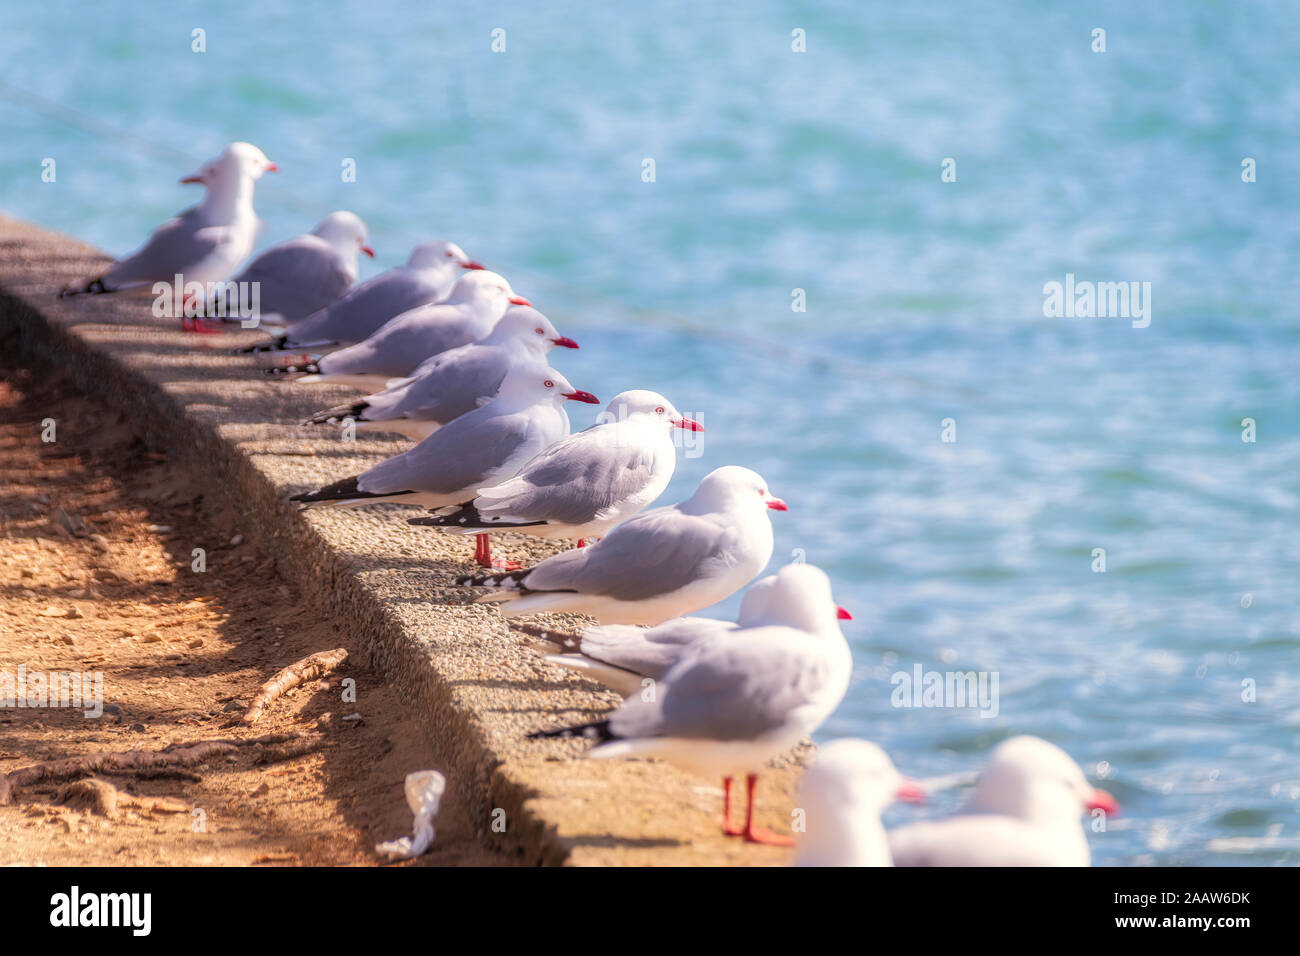 New Zealand, South Island, Akaroa, Close-up of seagulls Stock Photo